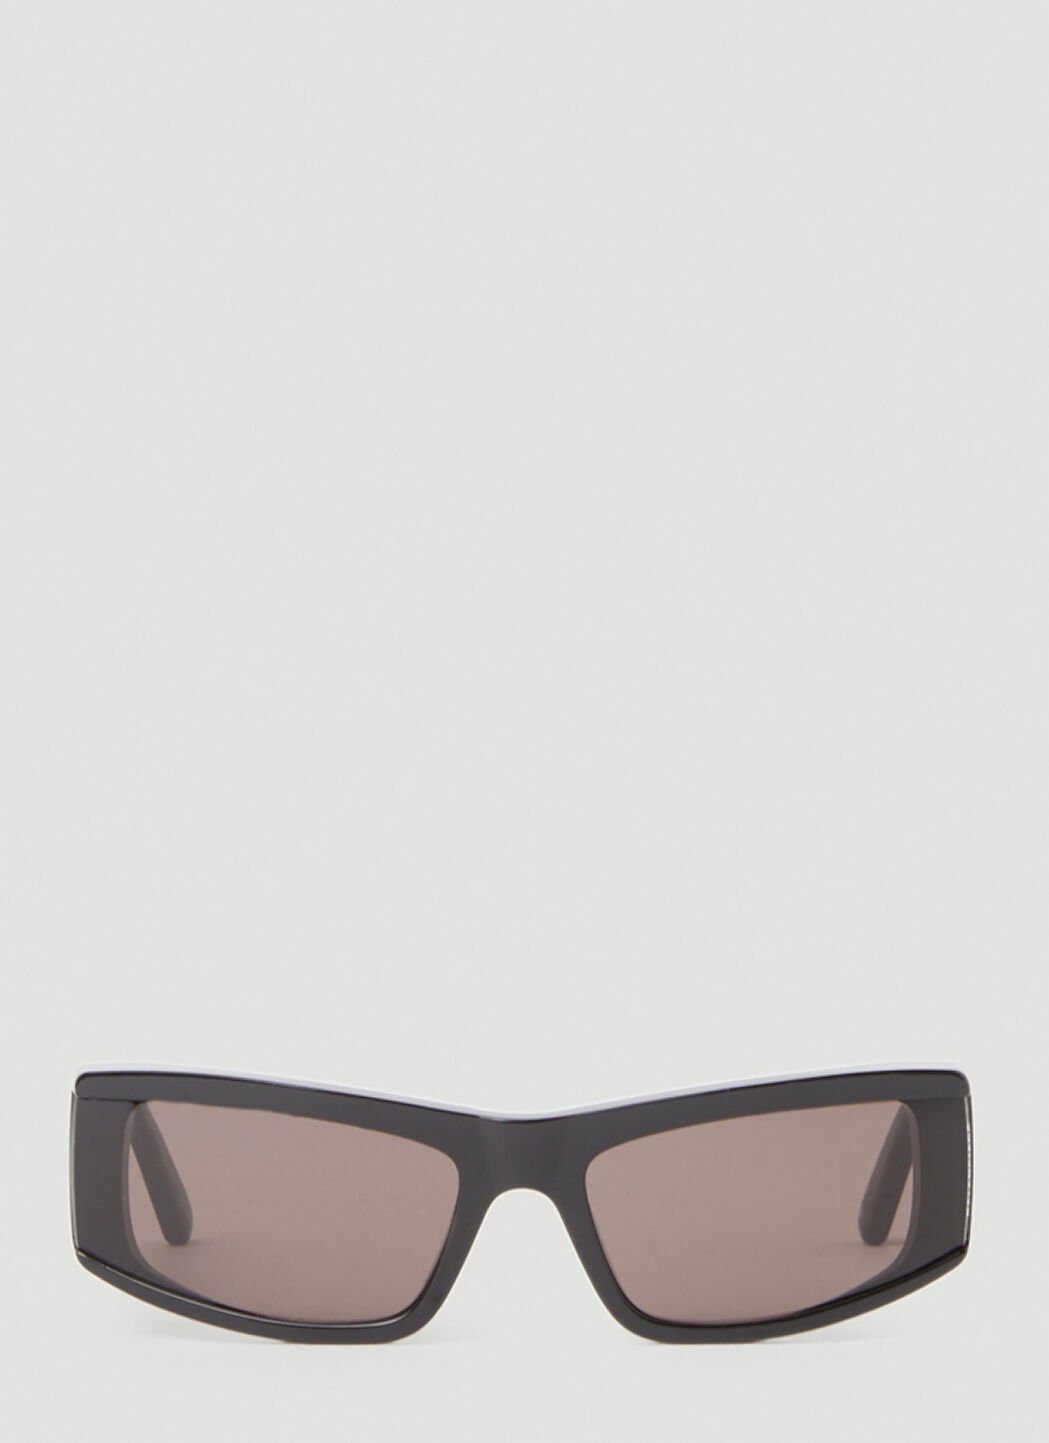 Balenciaga Edgy Rectangle Sunglasses Black bcs0253001